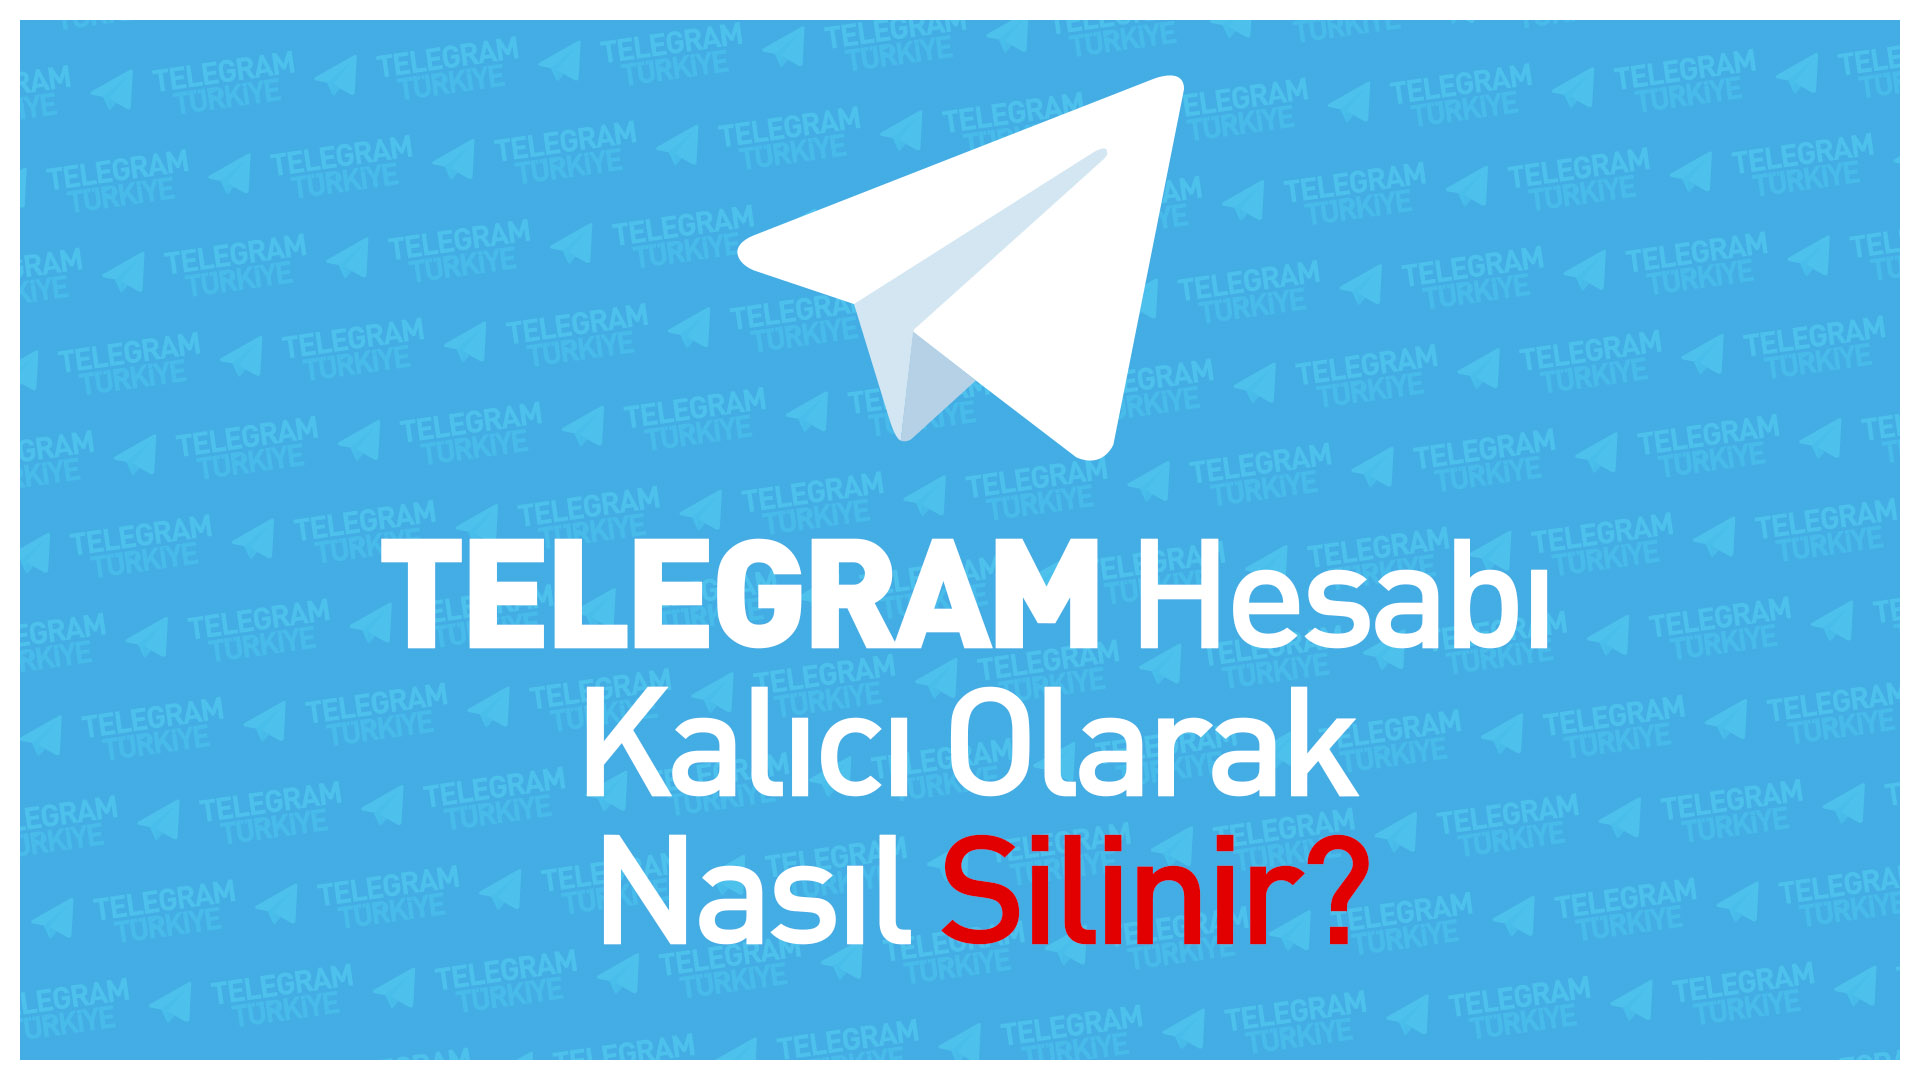 Telegram turkey. Telegram logo. Telegram logo 32x32. Telegram güvenlimi.